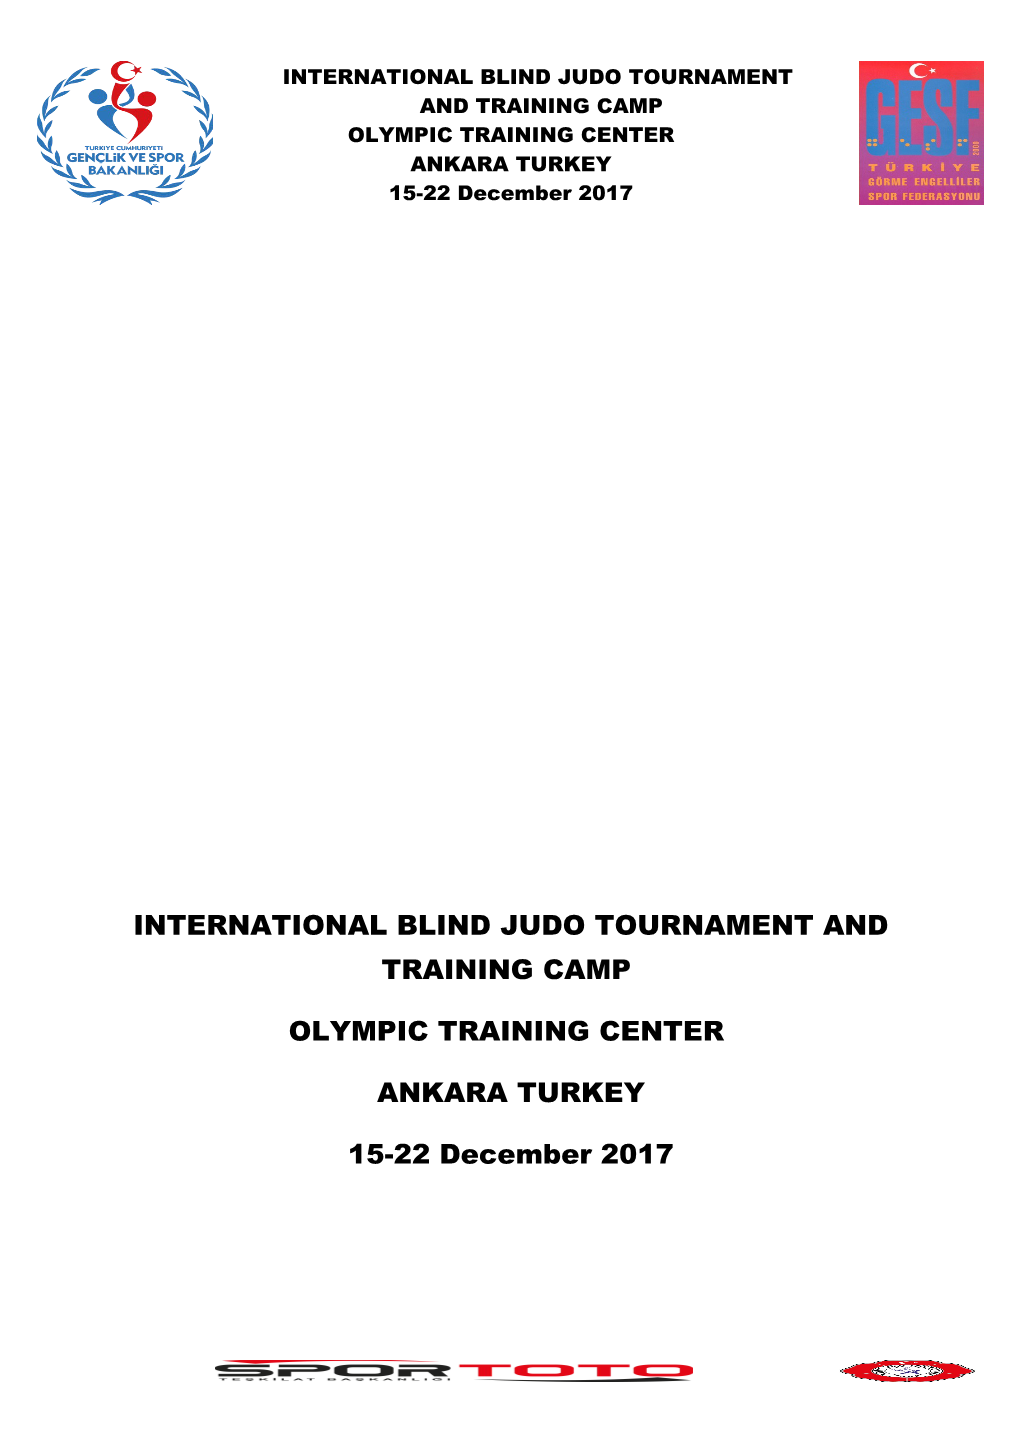 International Blind Judo Tournament and Training Camp